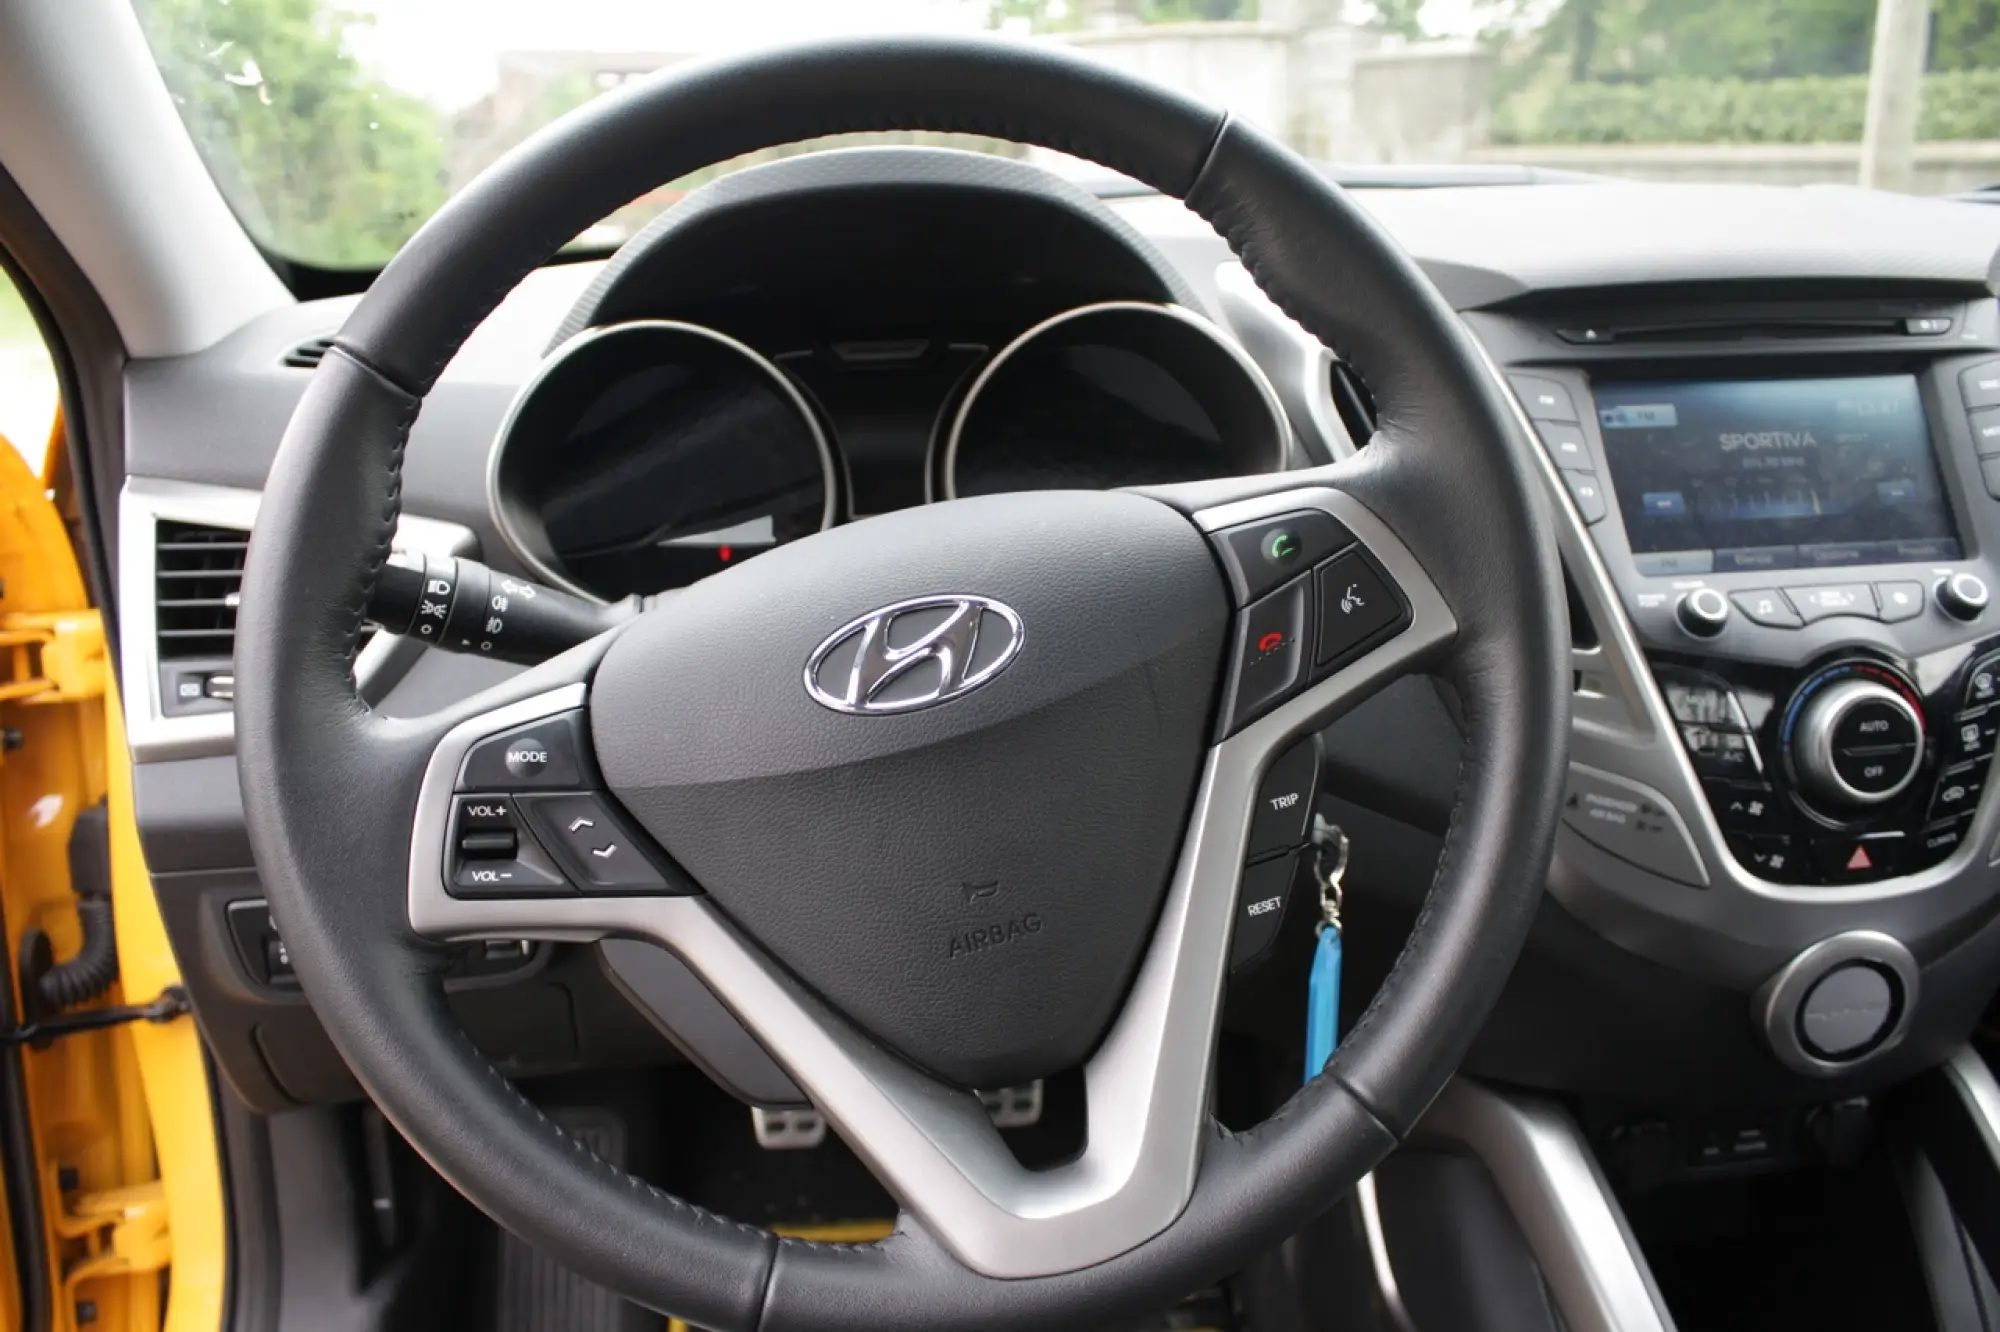 Hyundai Veloster - Test Drive 2012 - 113